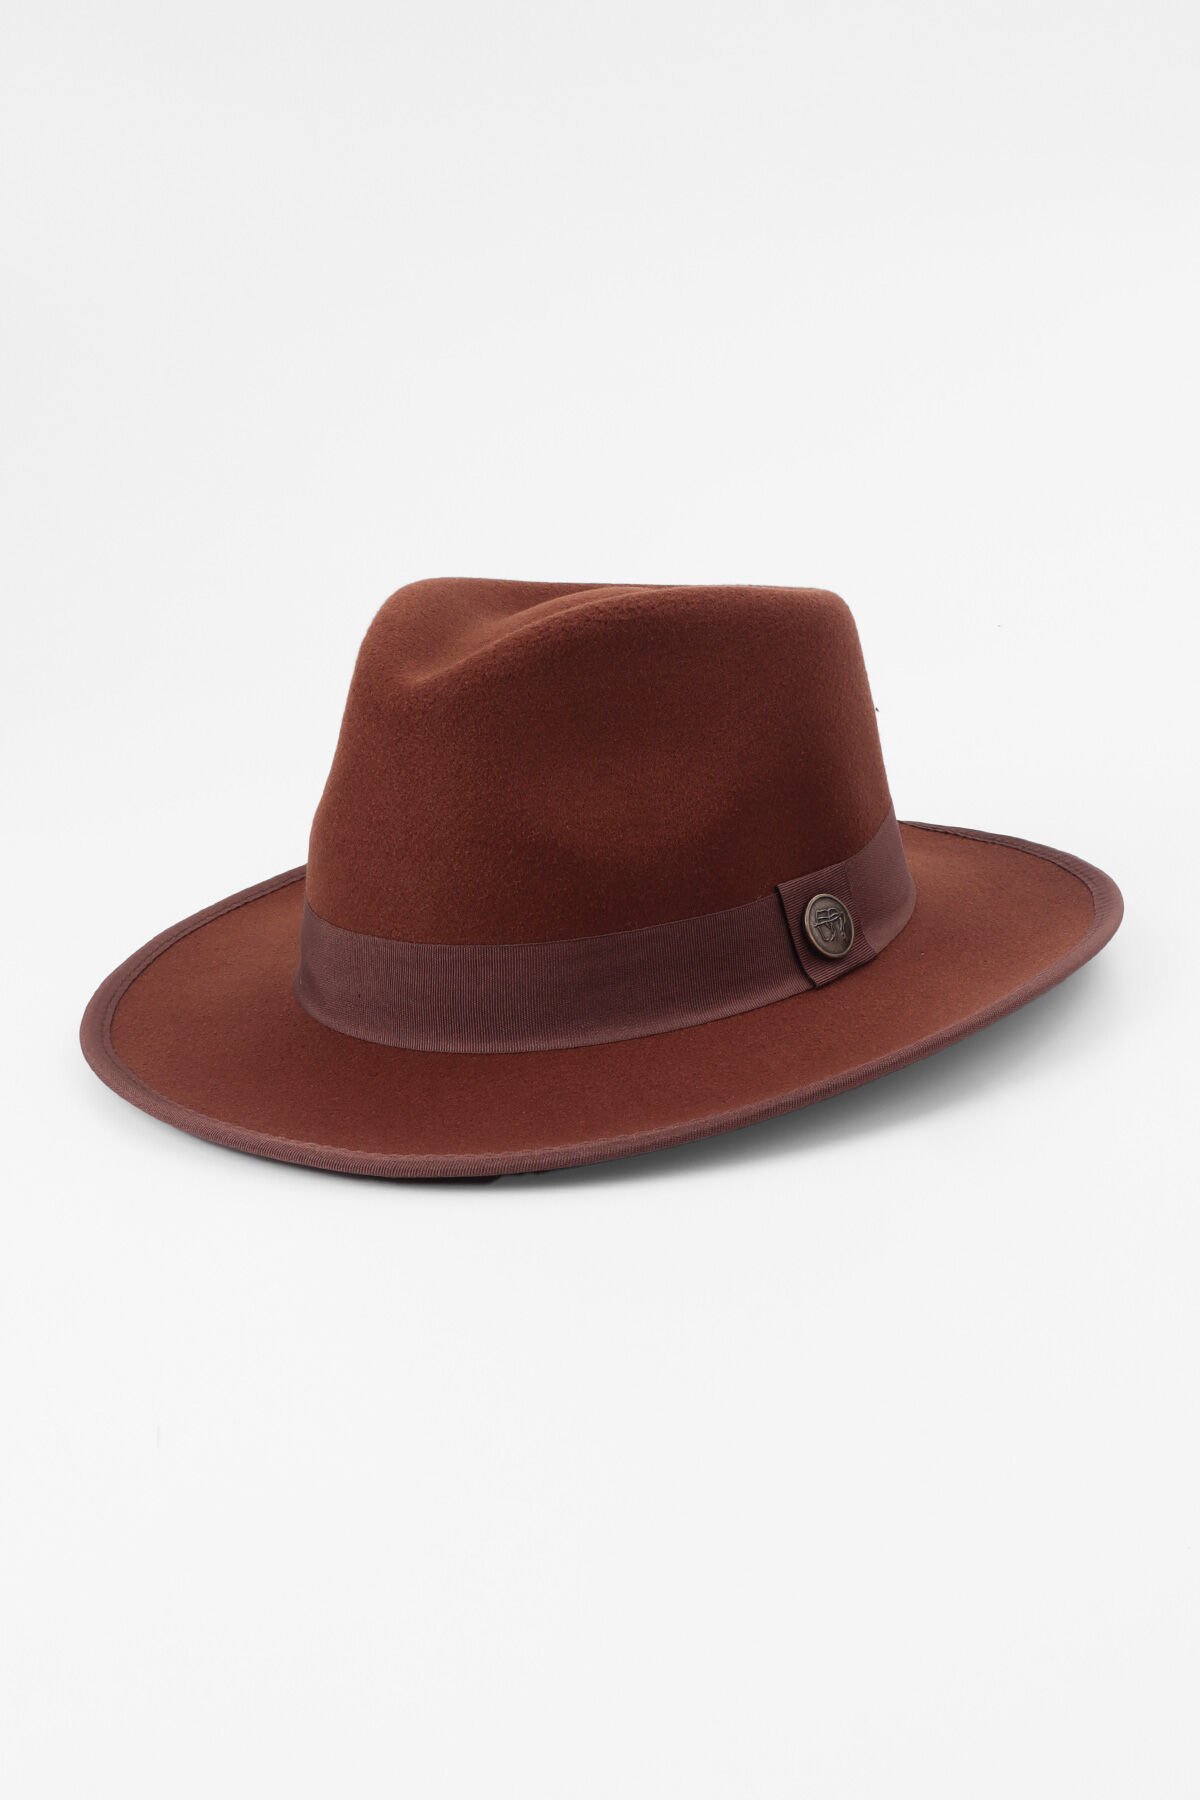 Unisex Keçe Fötr Panama Şapka - Taba